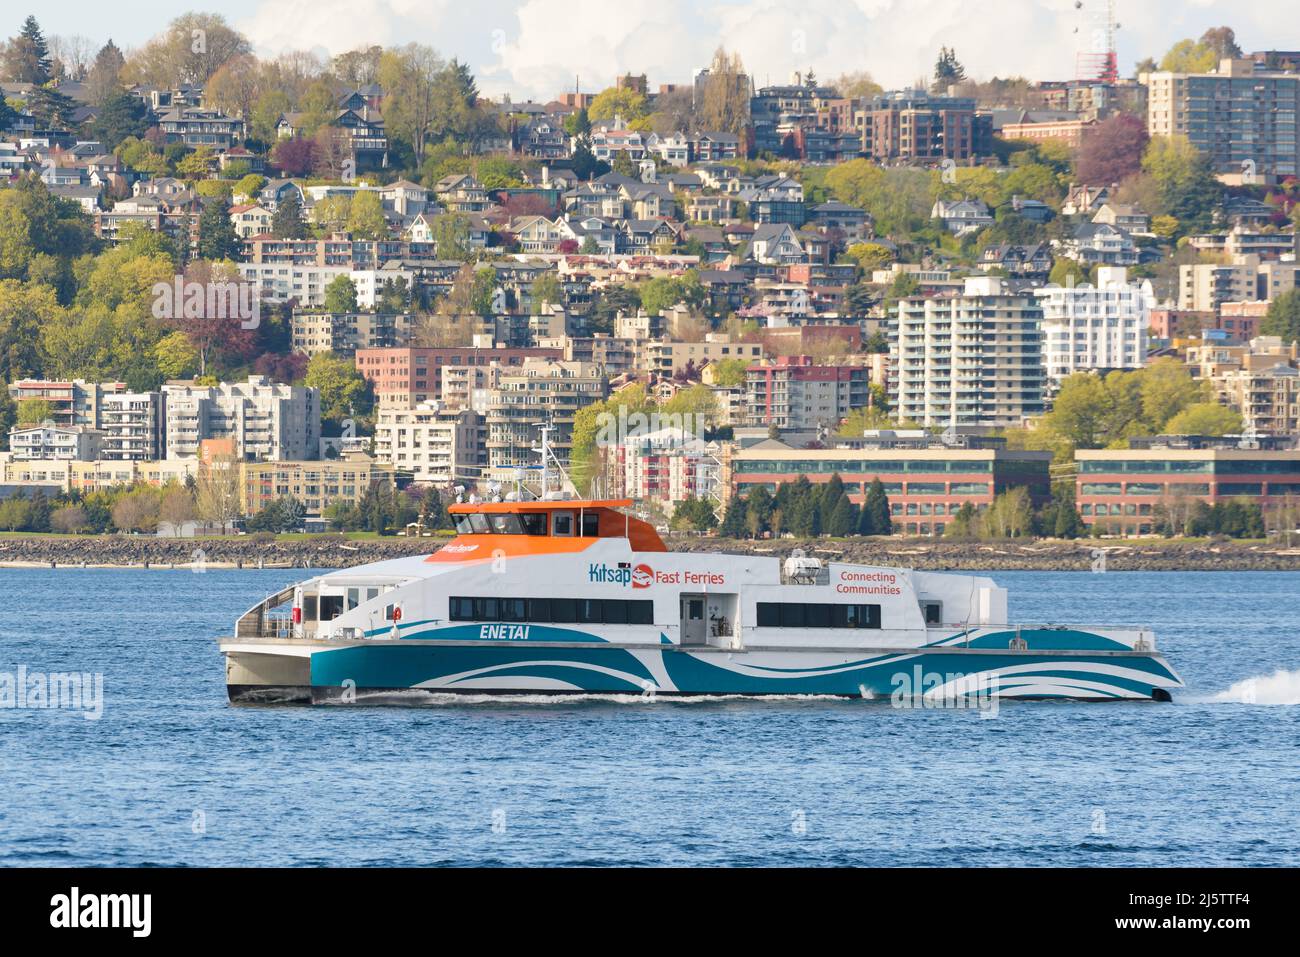 Seattle - April 22, 2022; Kitsap Fast Ferries catamaran Enetai leaving Seattle with service across Elliott Bay with  hillside in Queen Anne behind Stock Photo